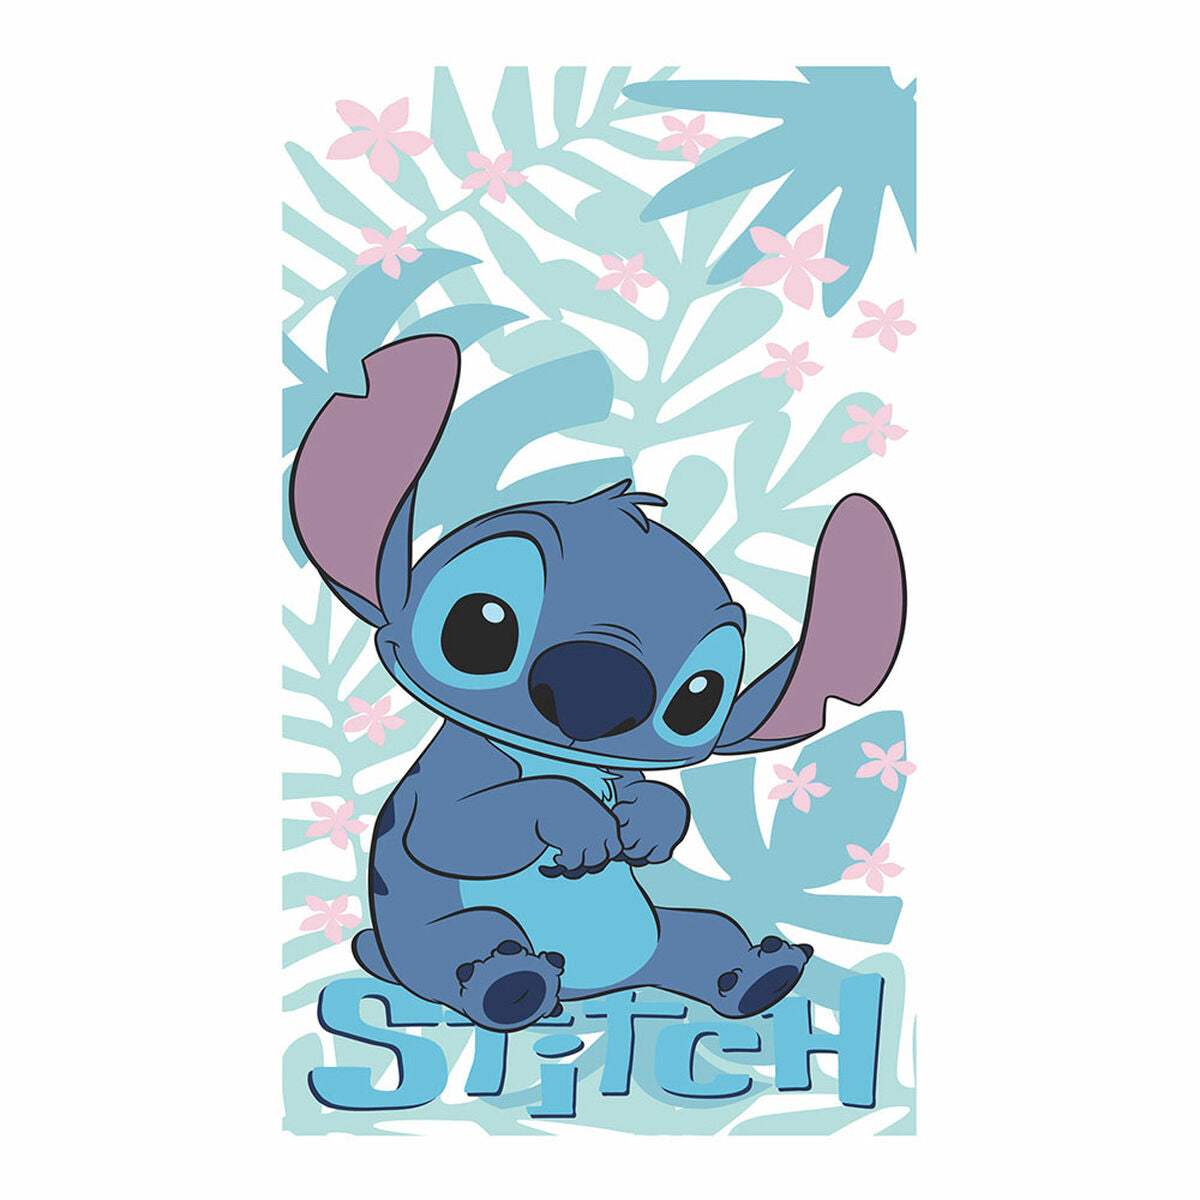 Strandbadetuch Stitch 140 x 70 cm Baumwolle